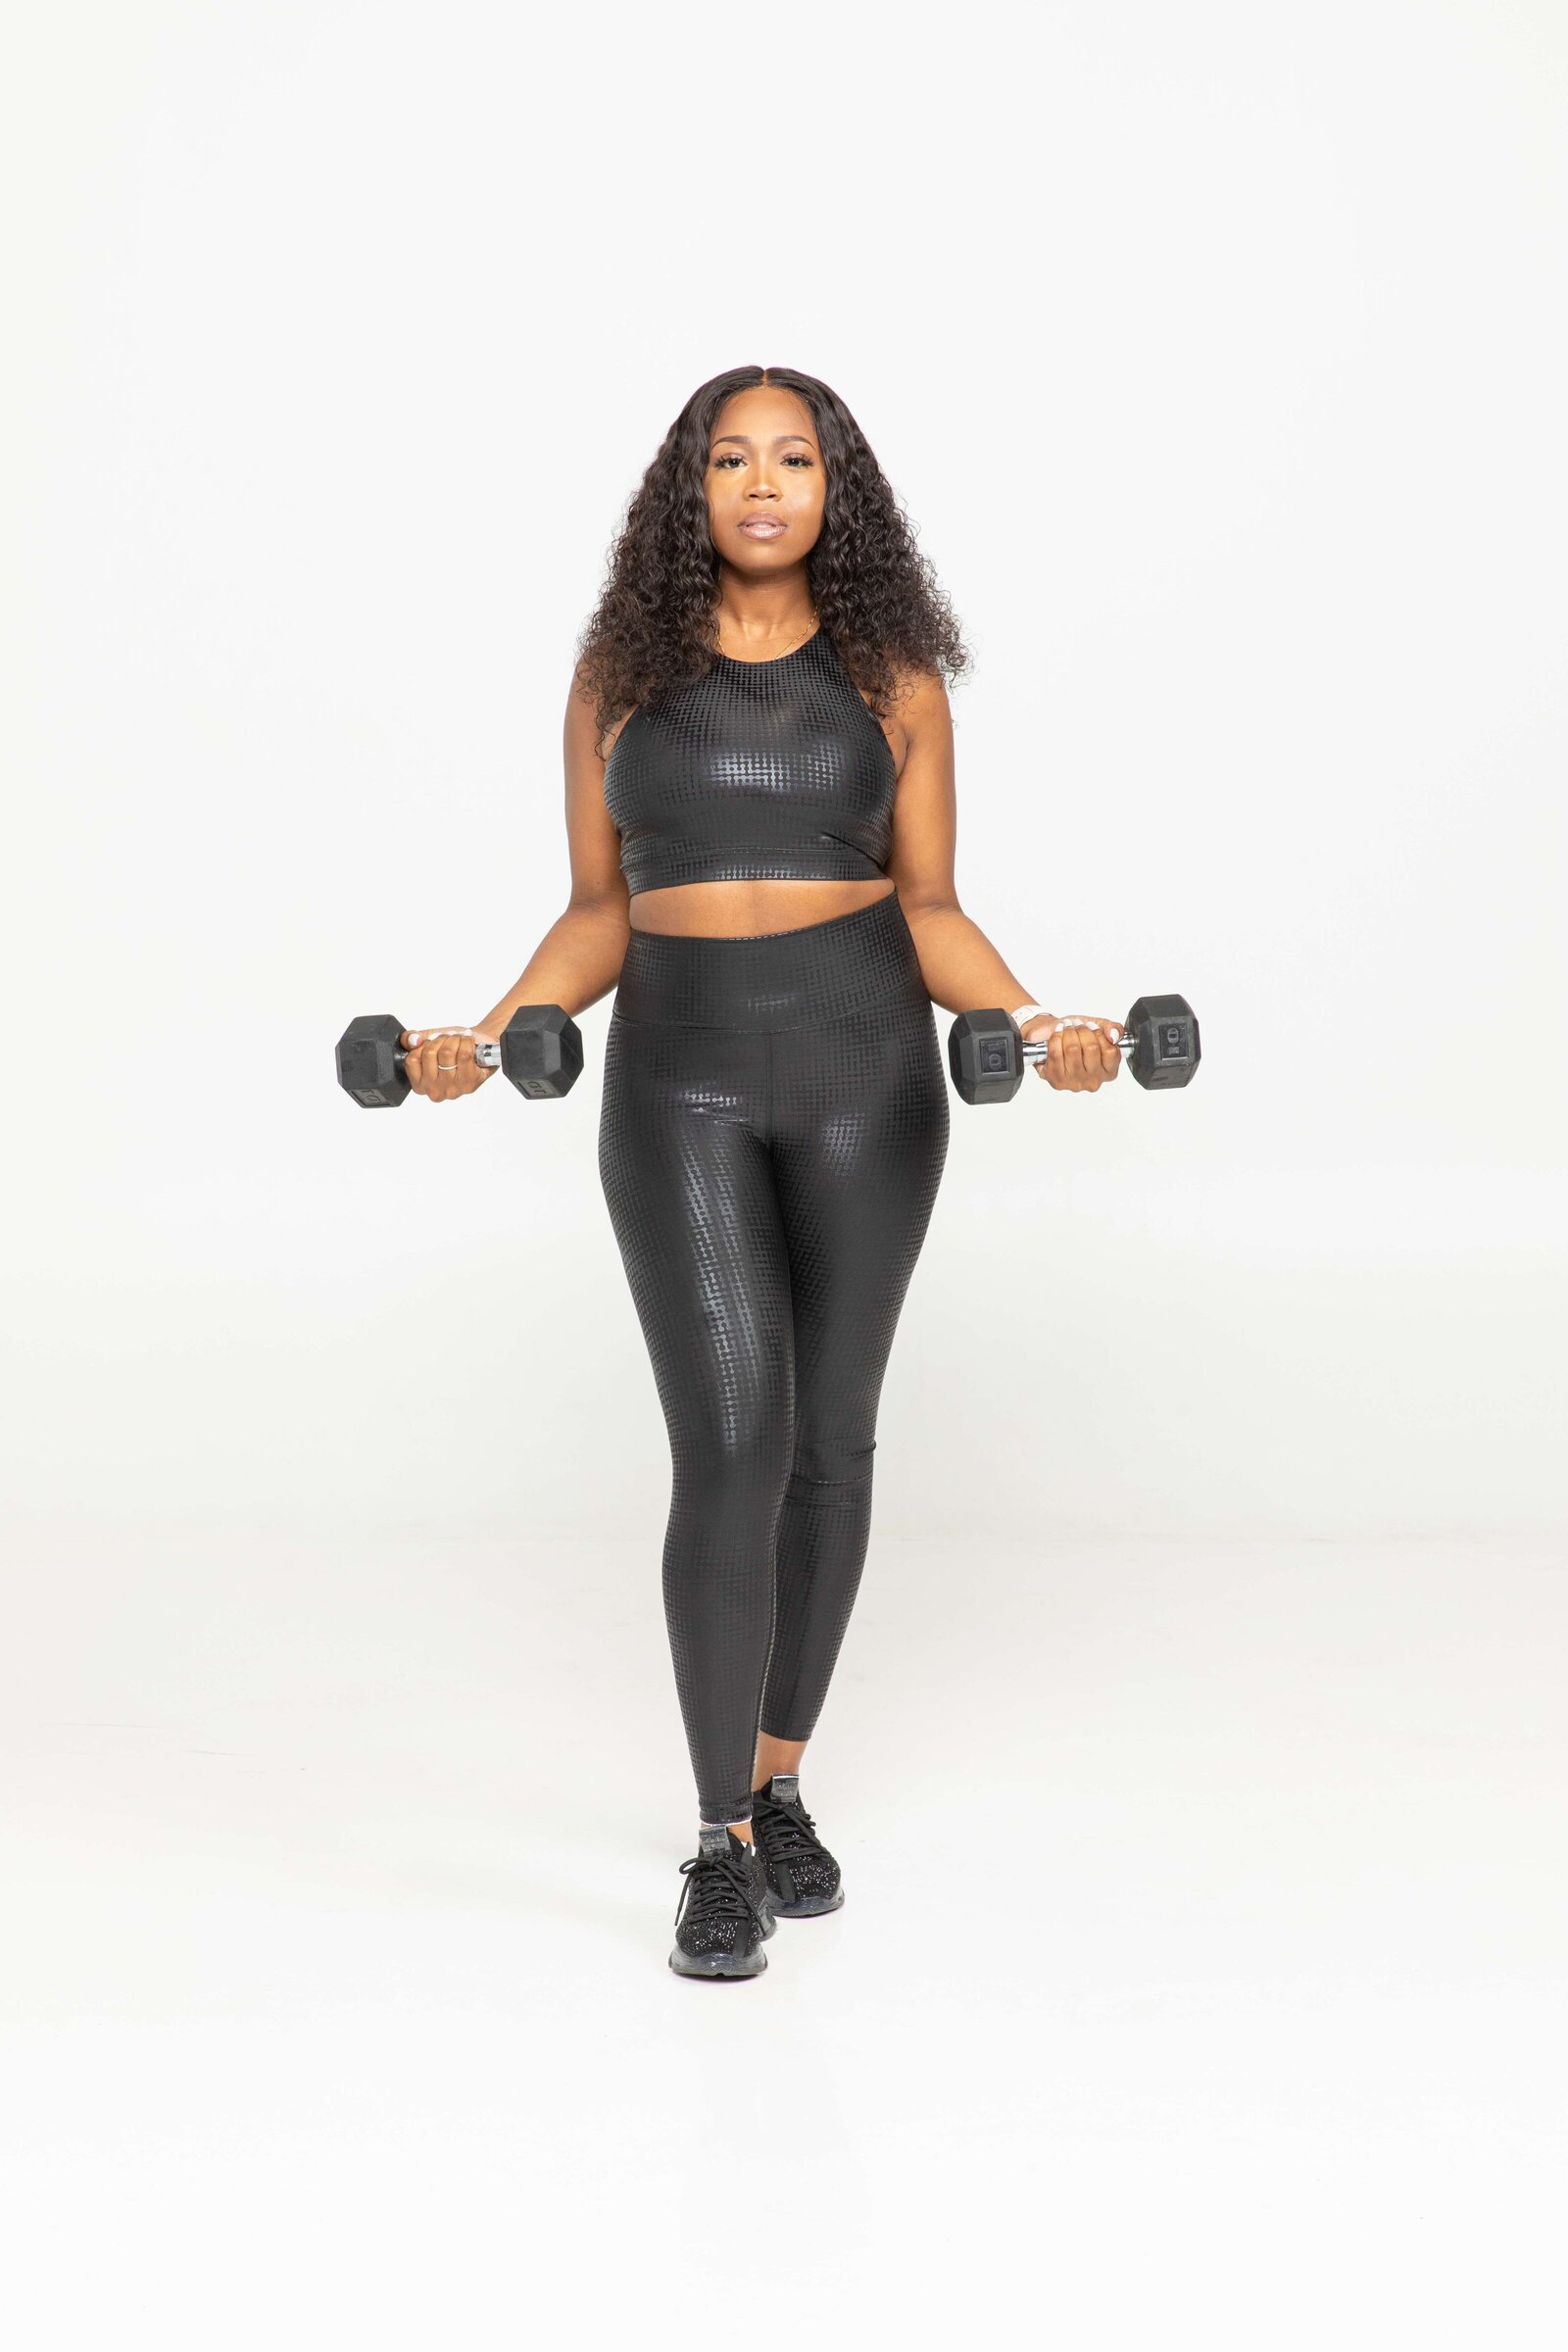 Black Female Personal Trainer (2)